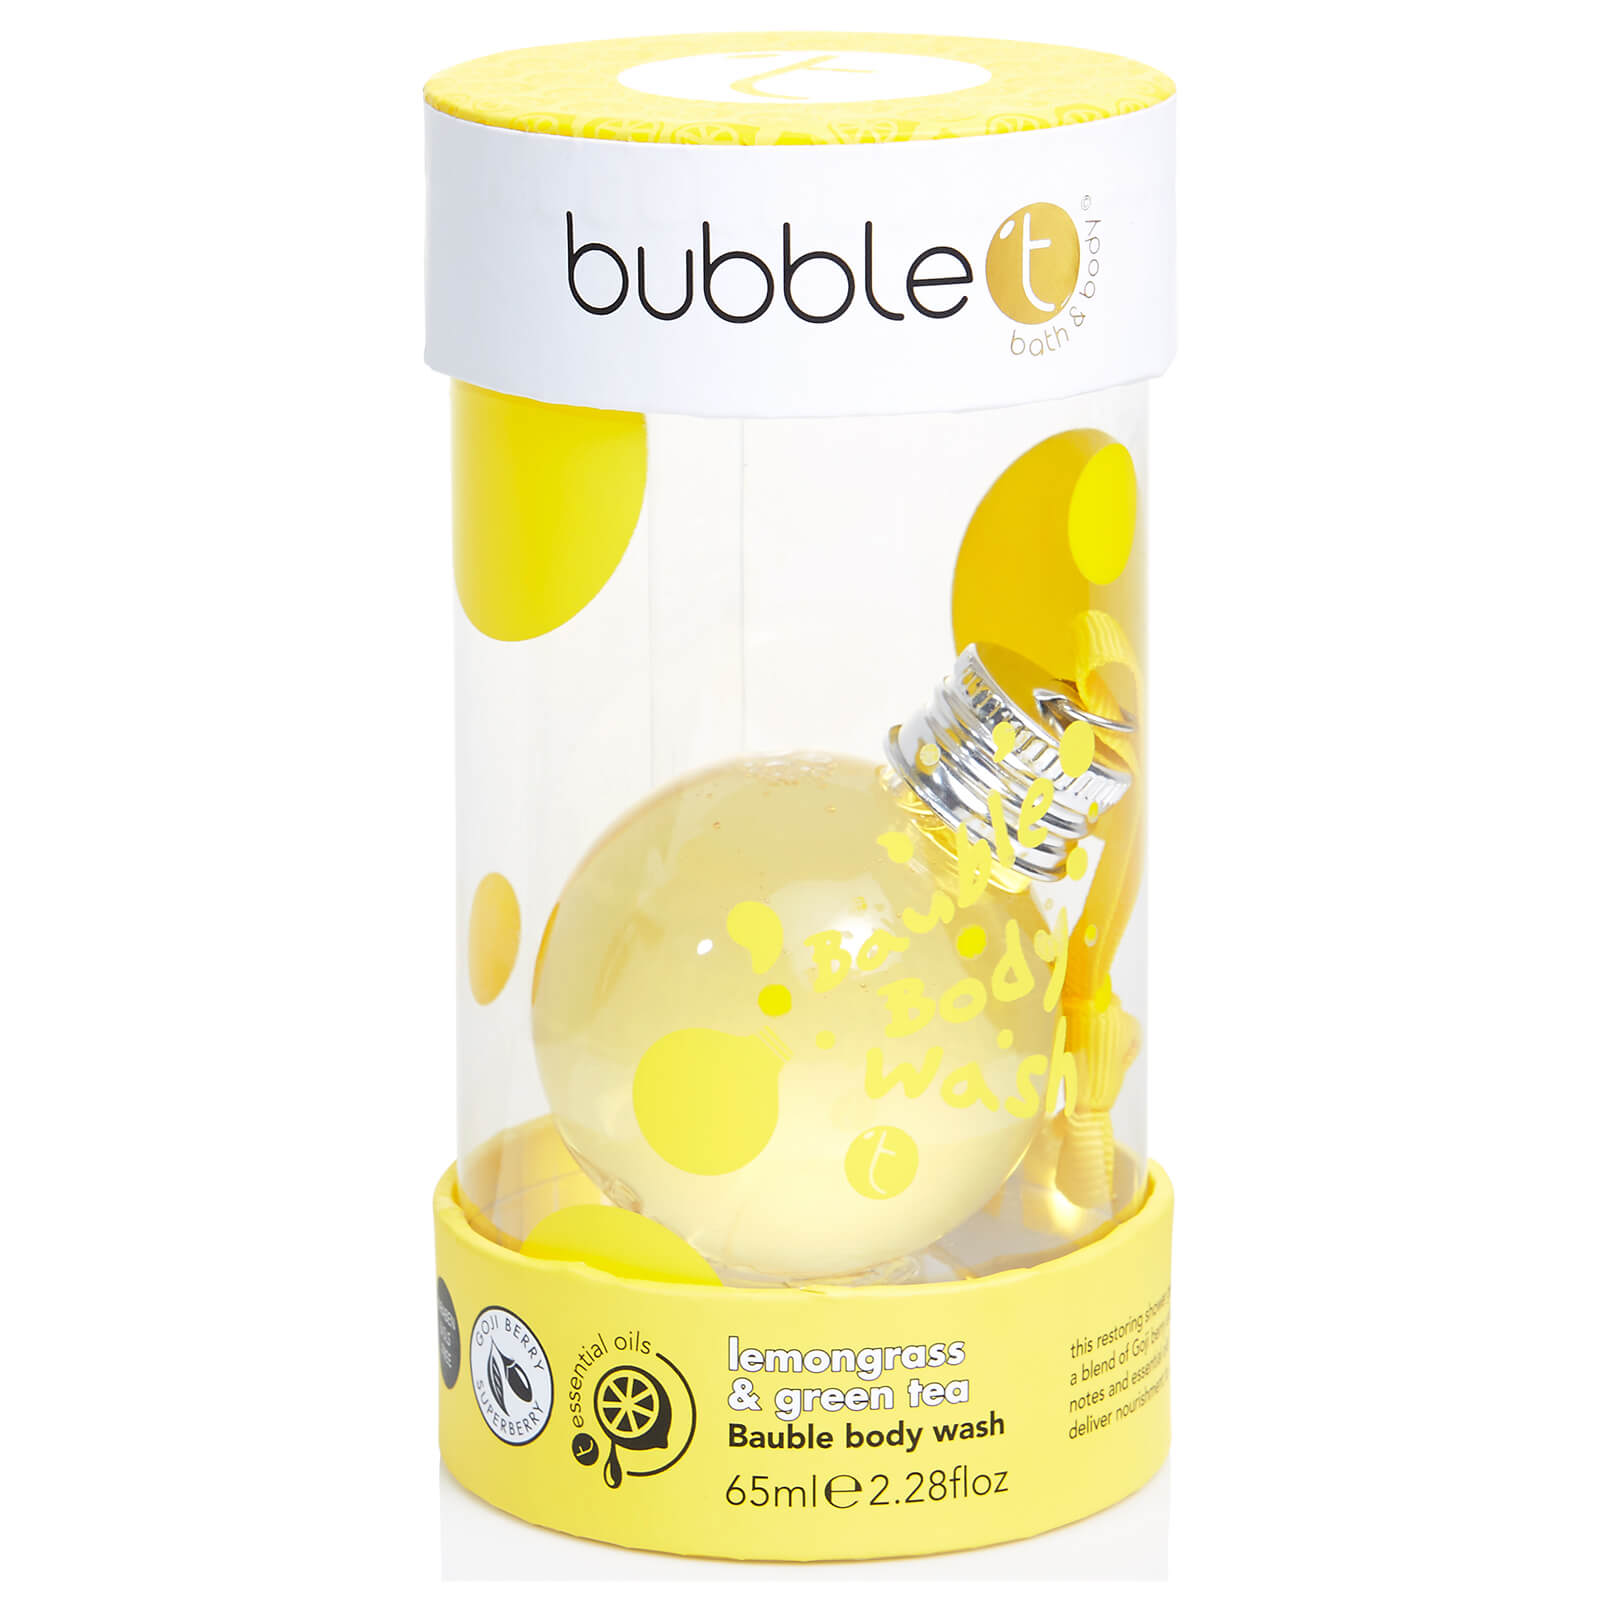 Bubble T Bath & Body - Solo Bauble 100ml (Lemongrass & Green Tea)